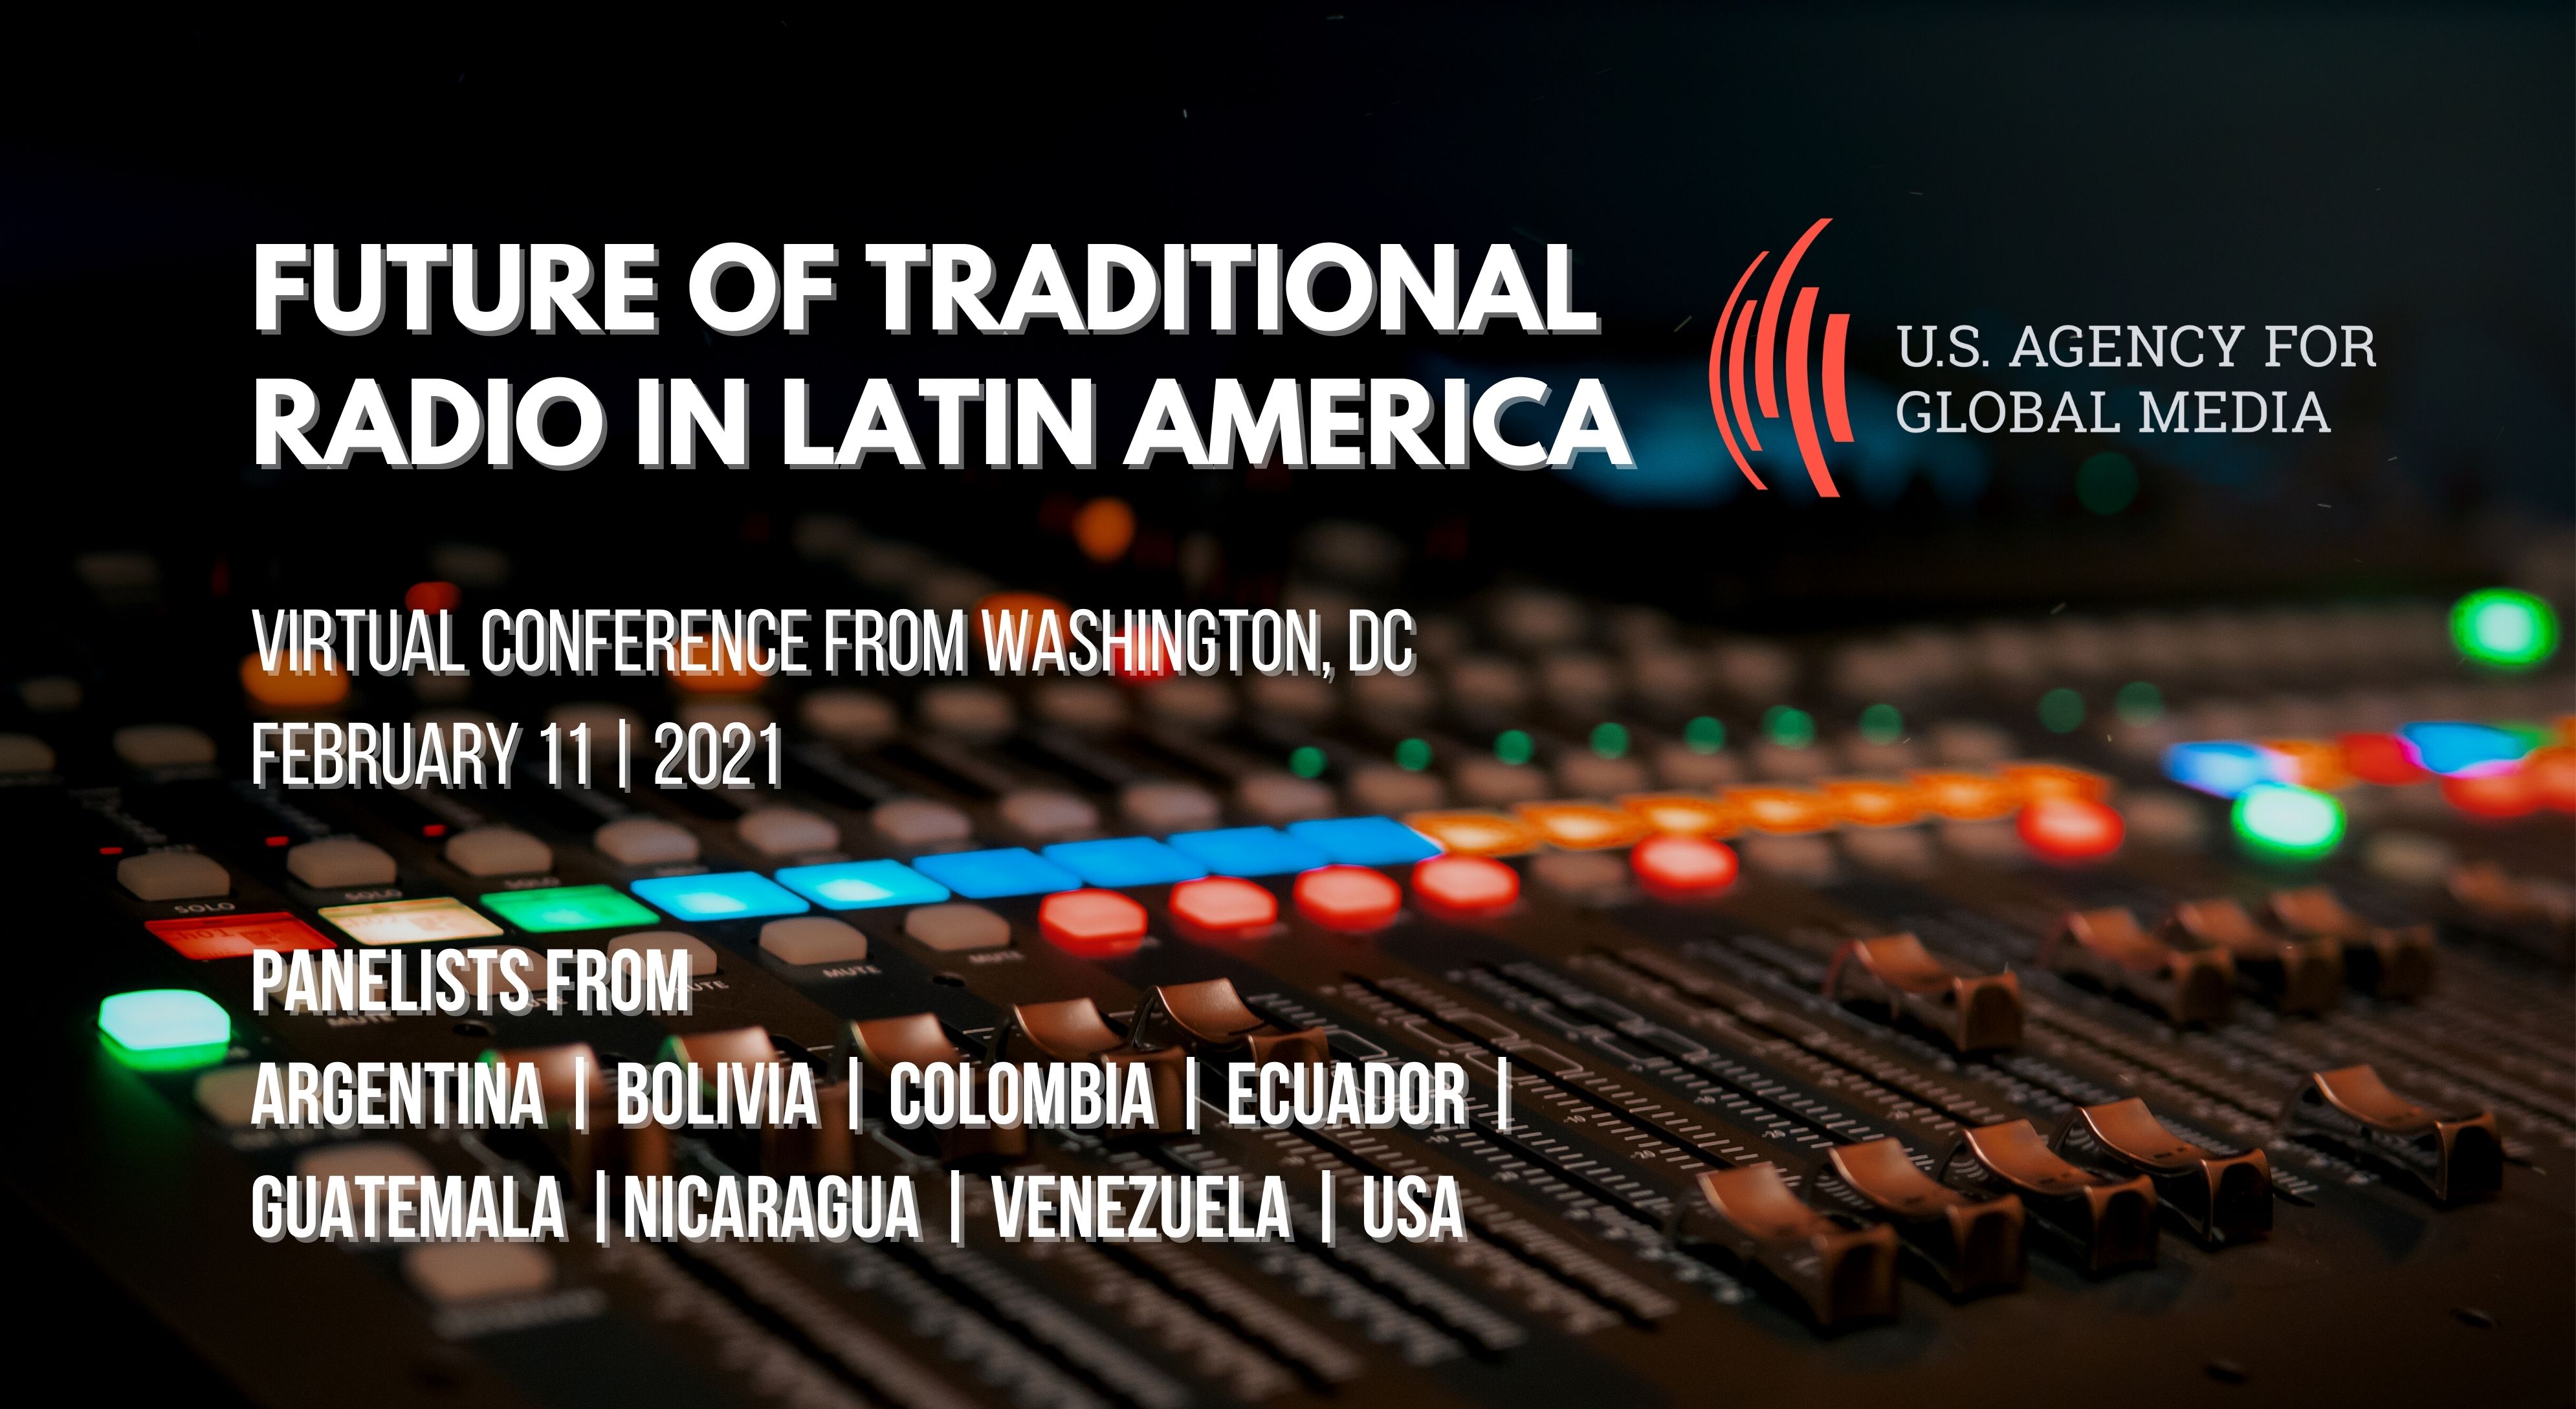 The future of radio in Latin America